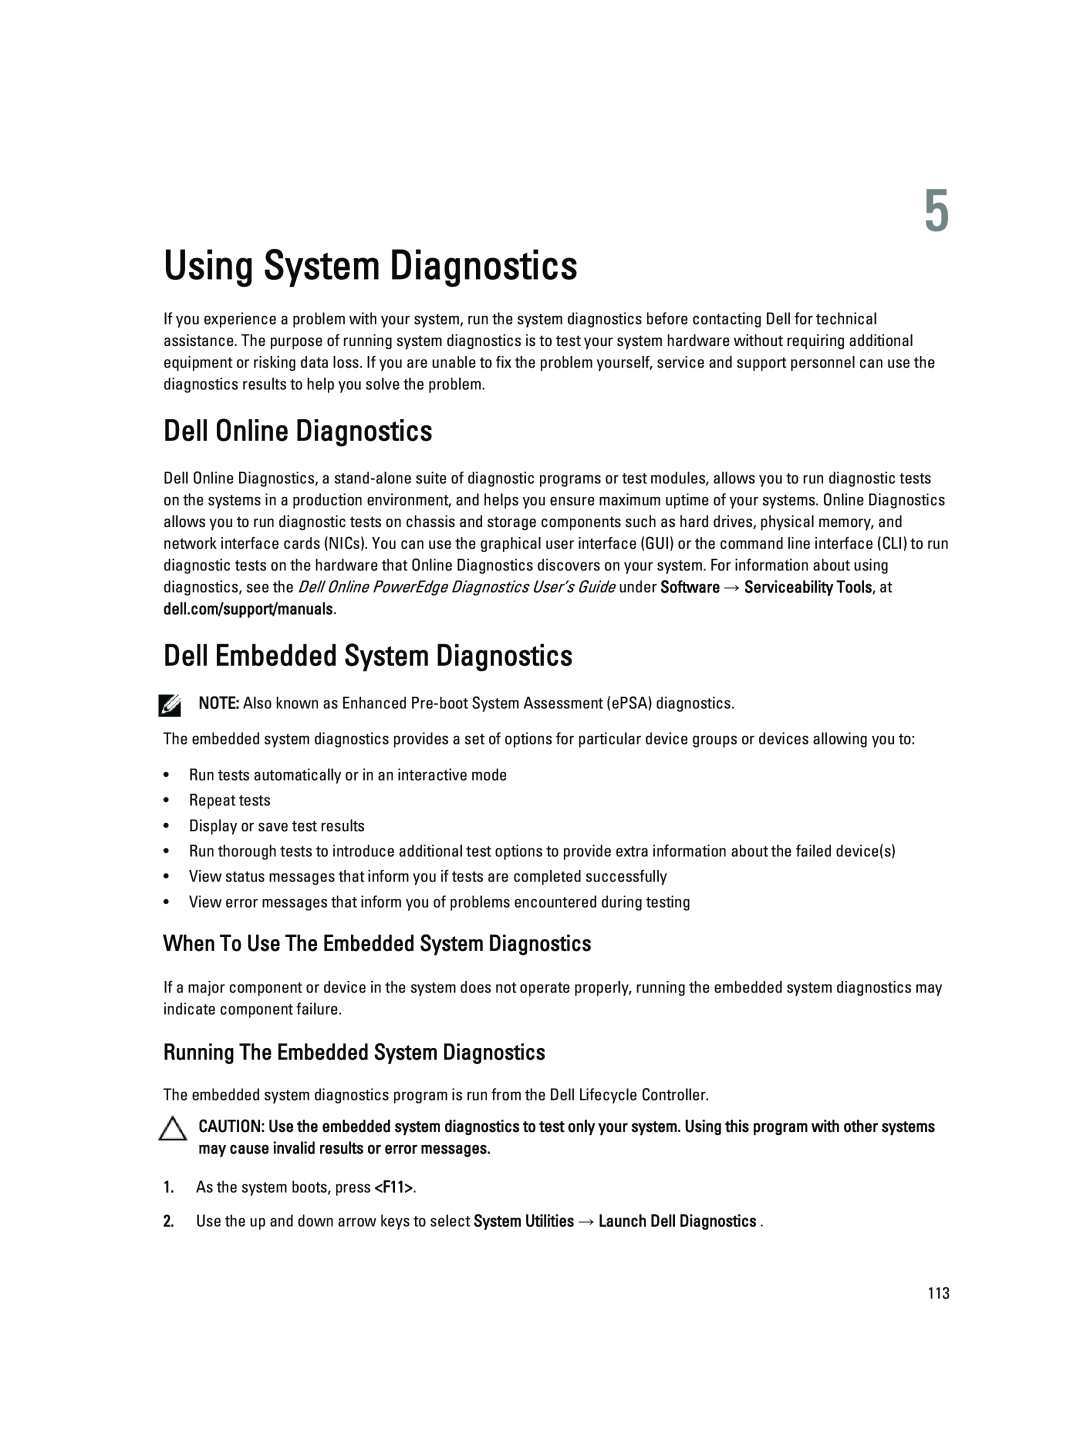 Dell R820 owner manual Using System Diagnostics, Dell Online Diagnostics, Dell Embedded System Diagnostics 